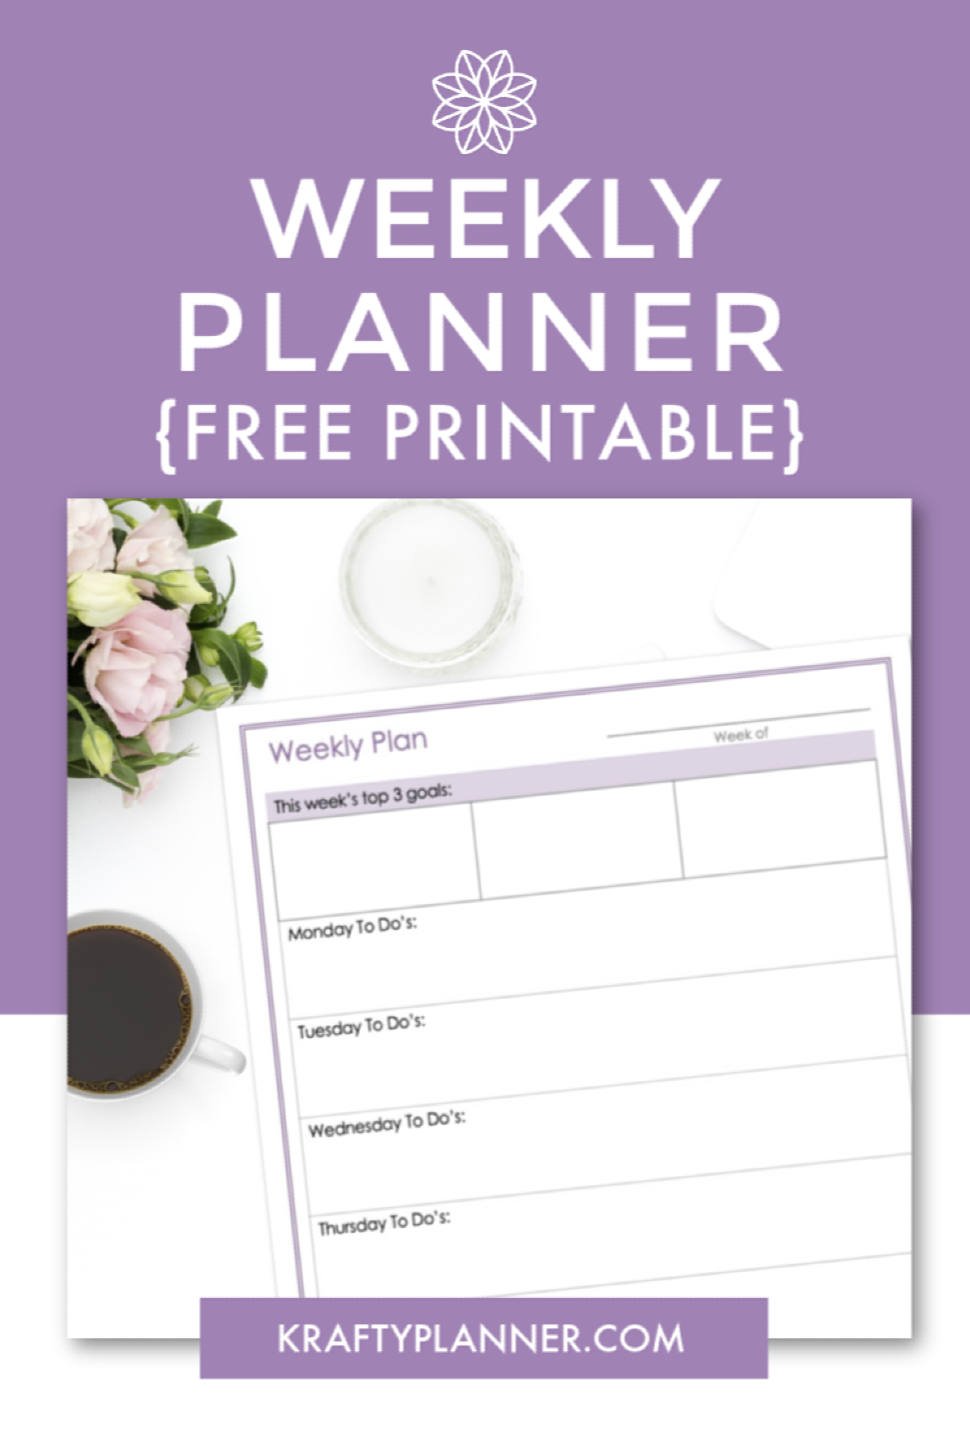 Weekly Planning Worksheet PIN.png